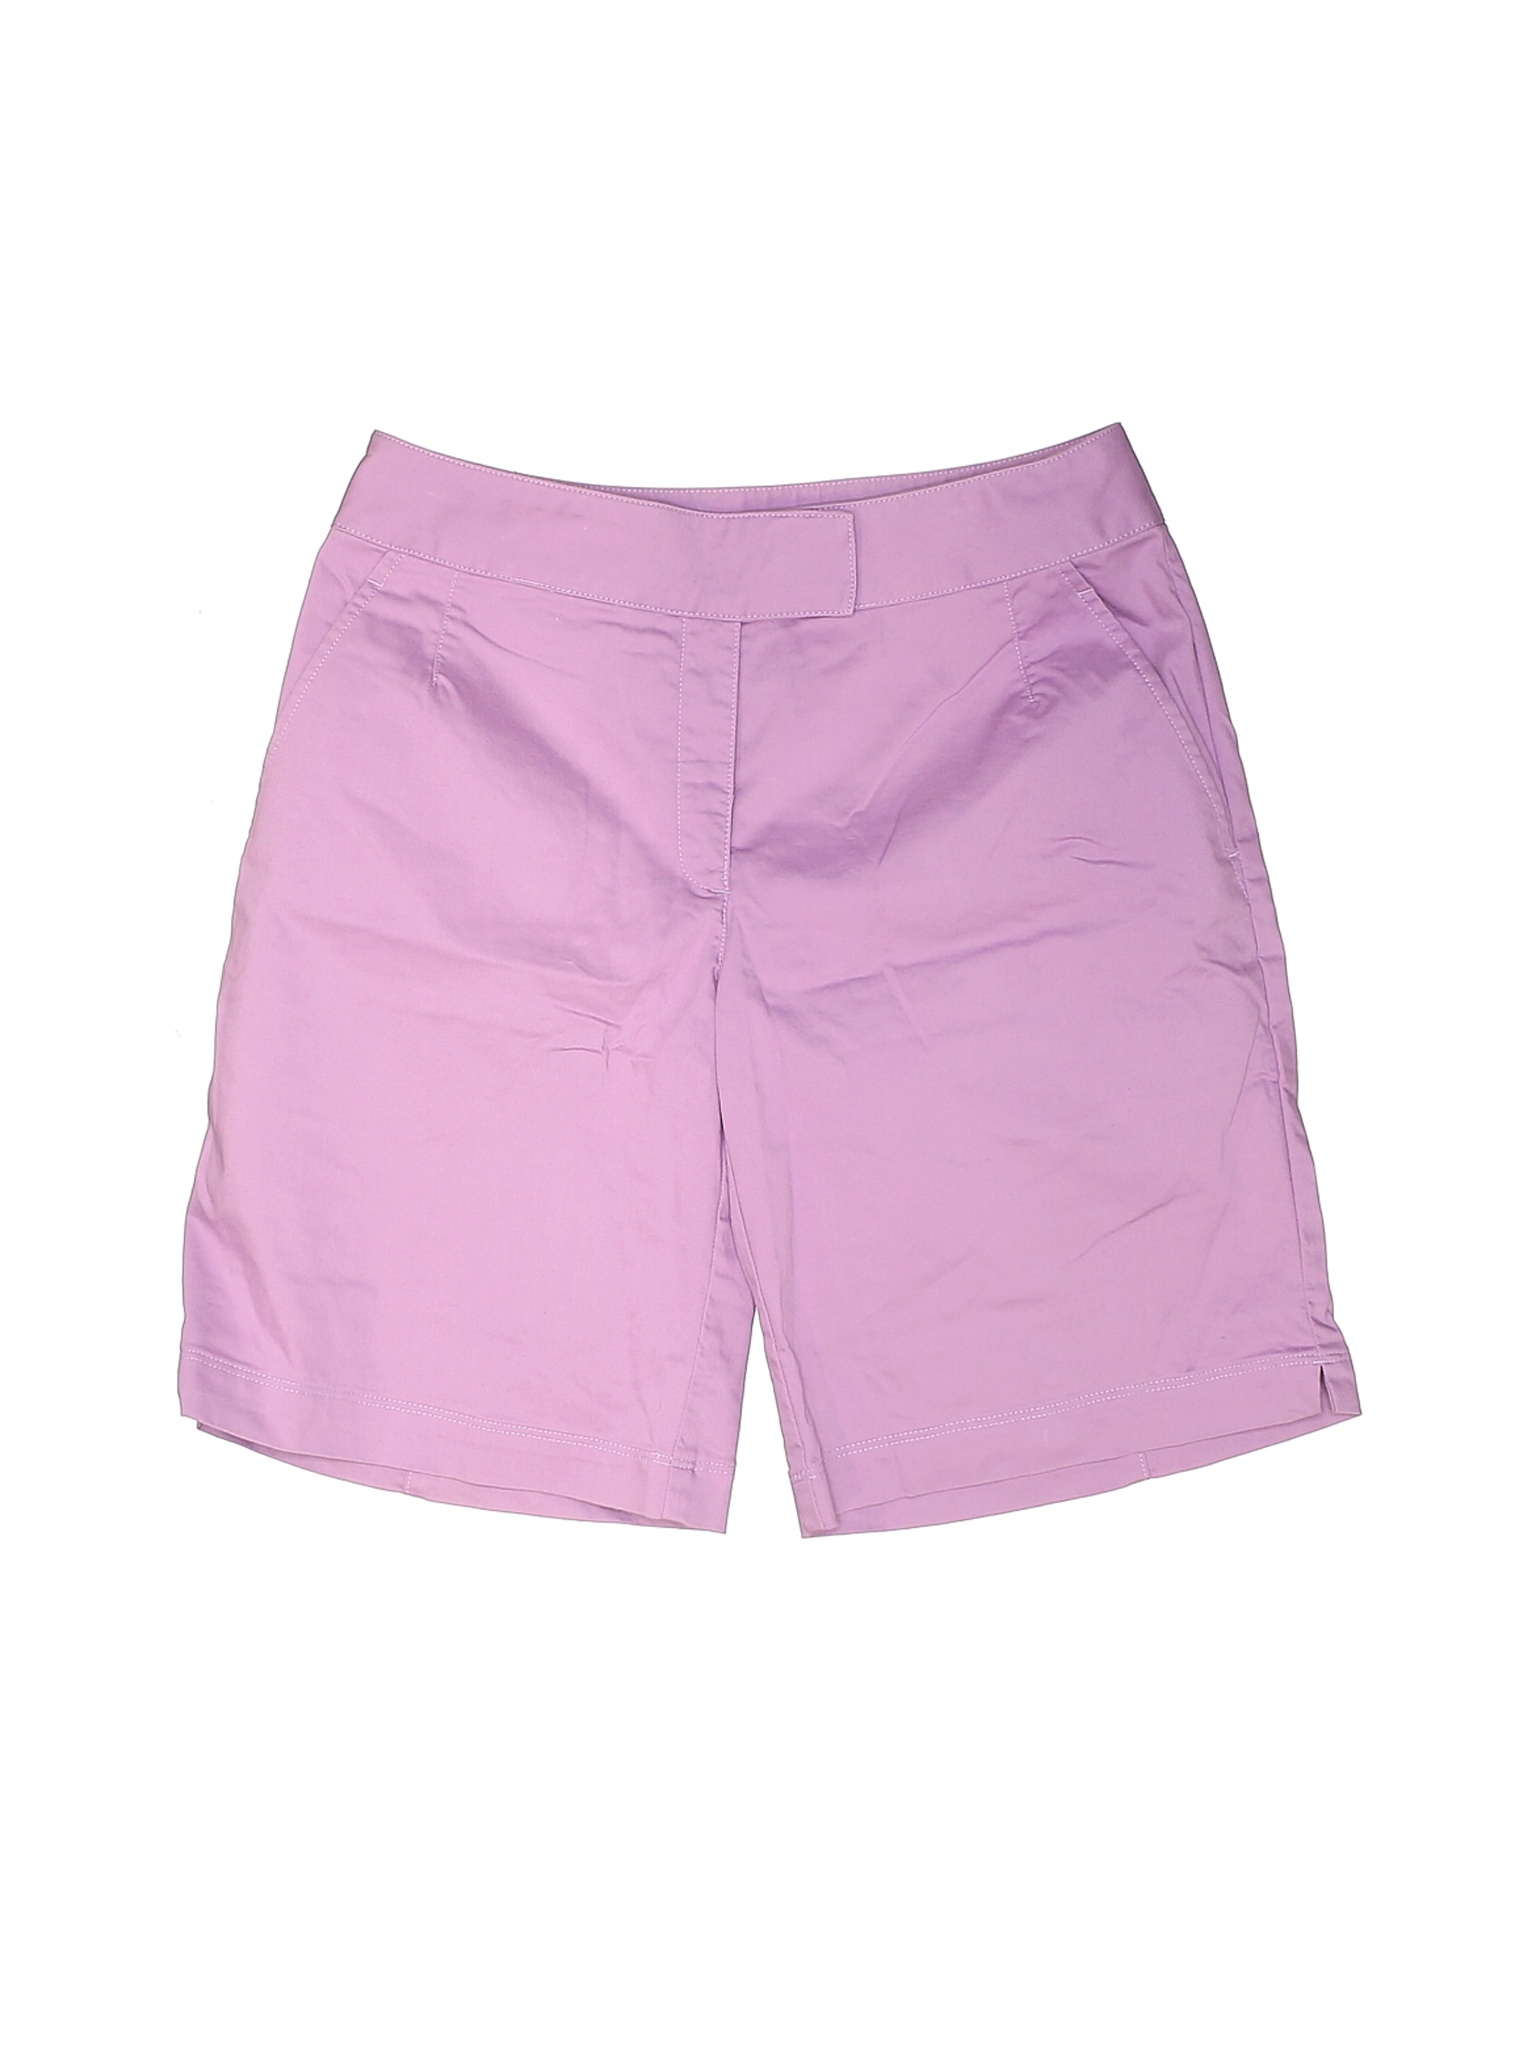 Nike Golf Women Purple Athletic Shorts 4 | eBay